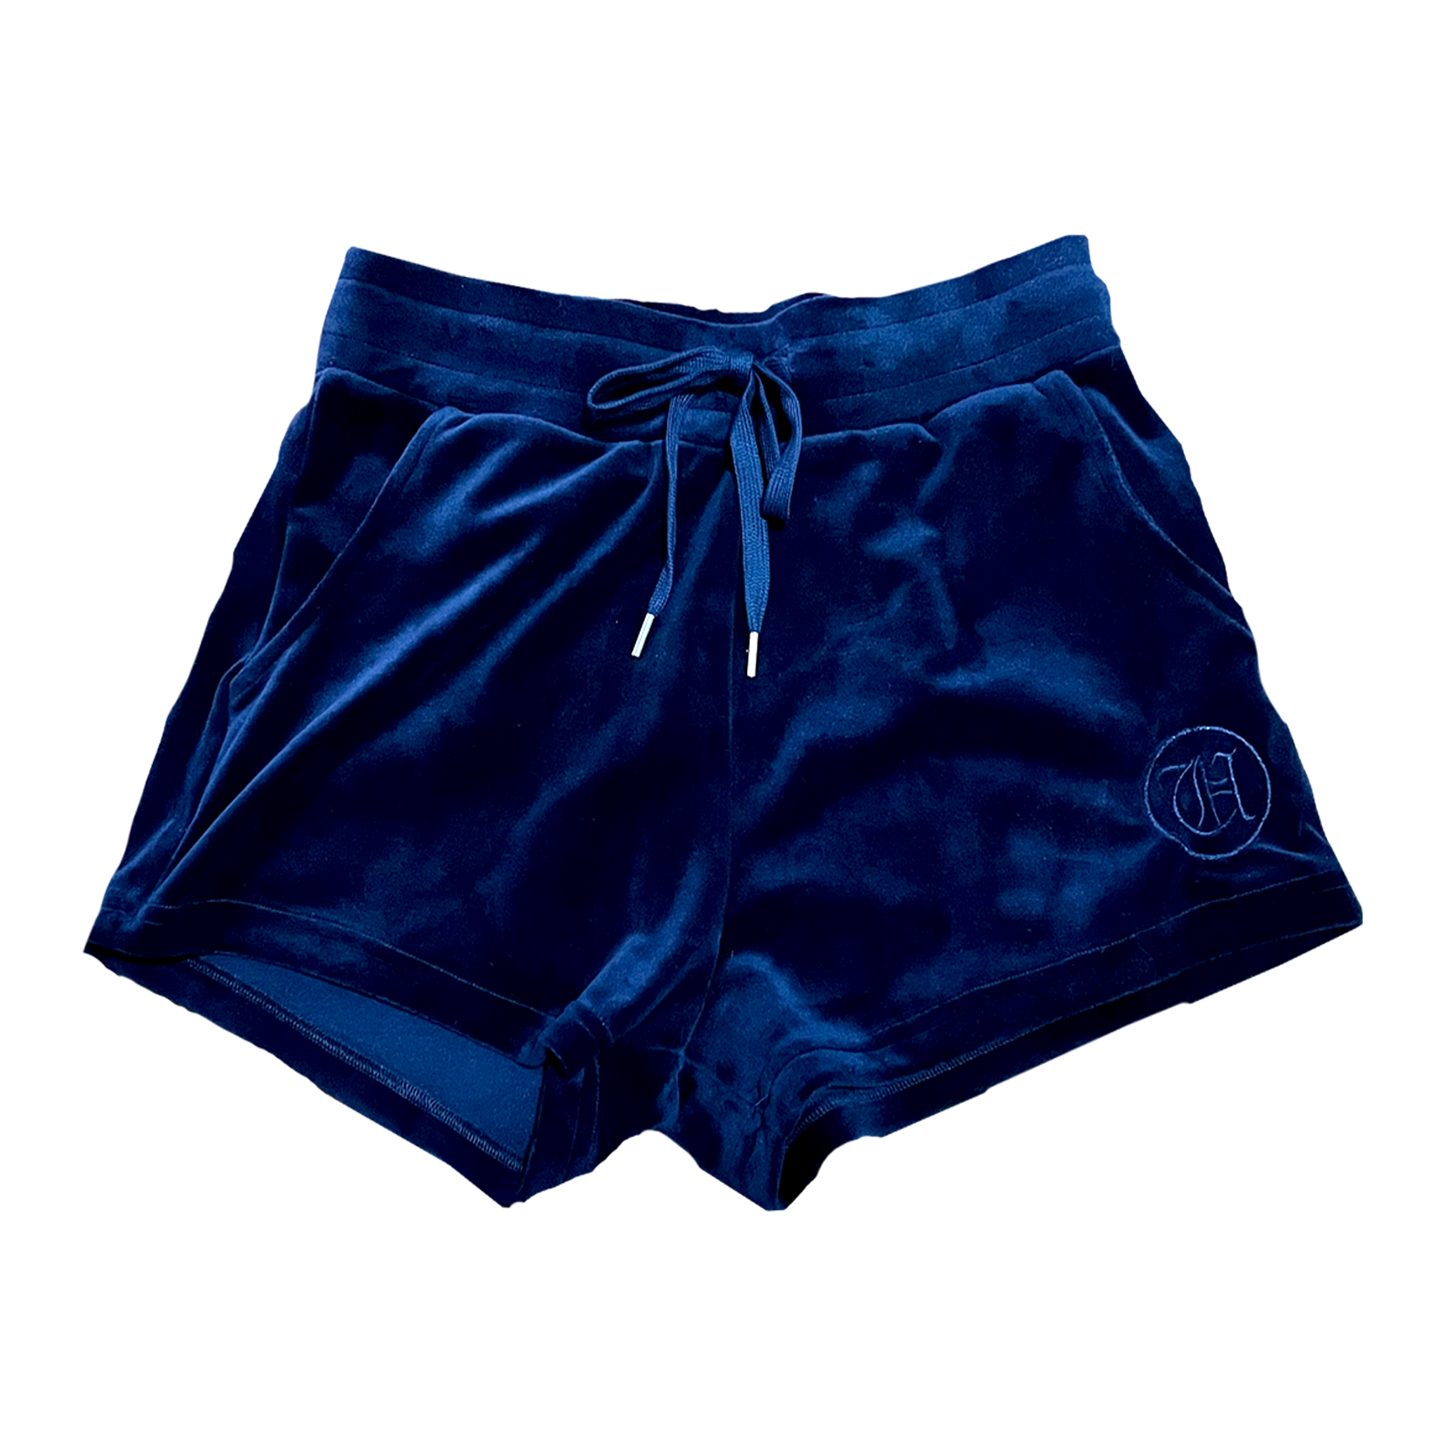 Unruly Women's Velvet Shorts - Navy Blue